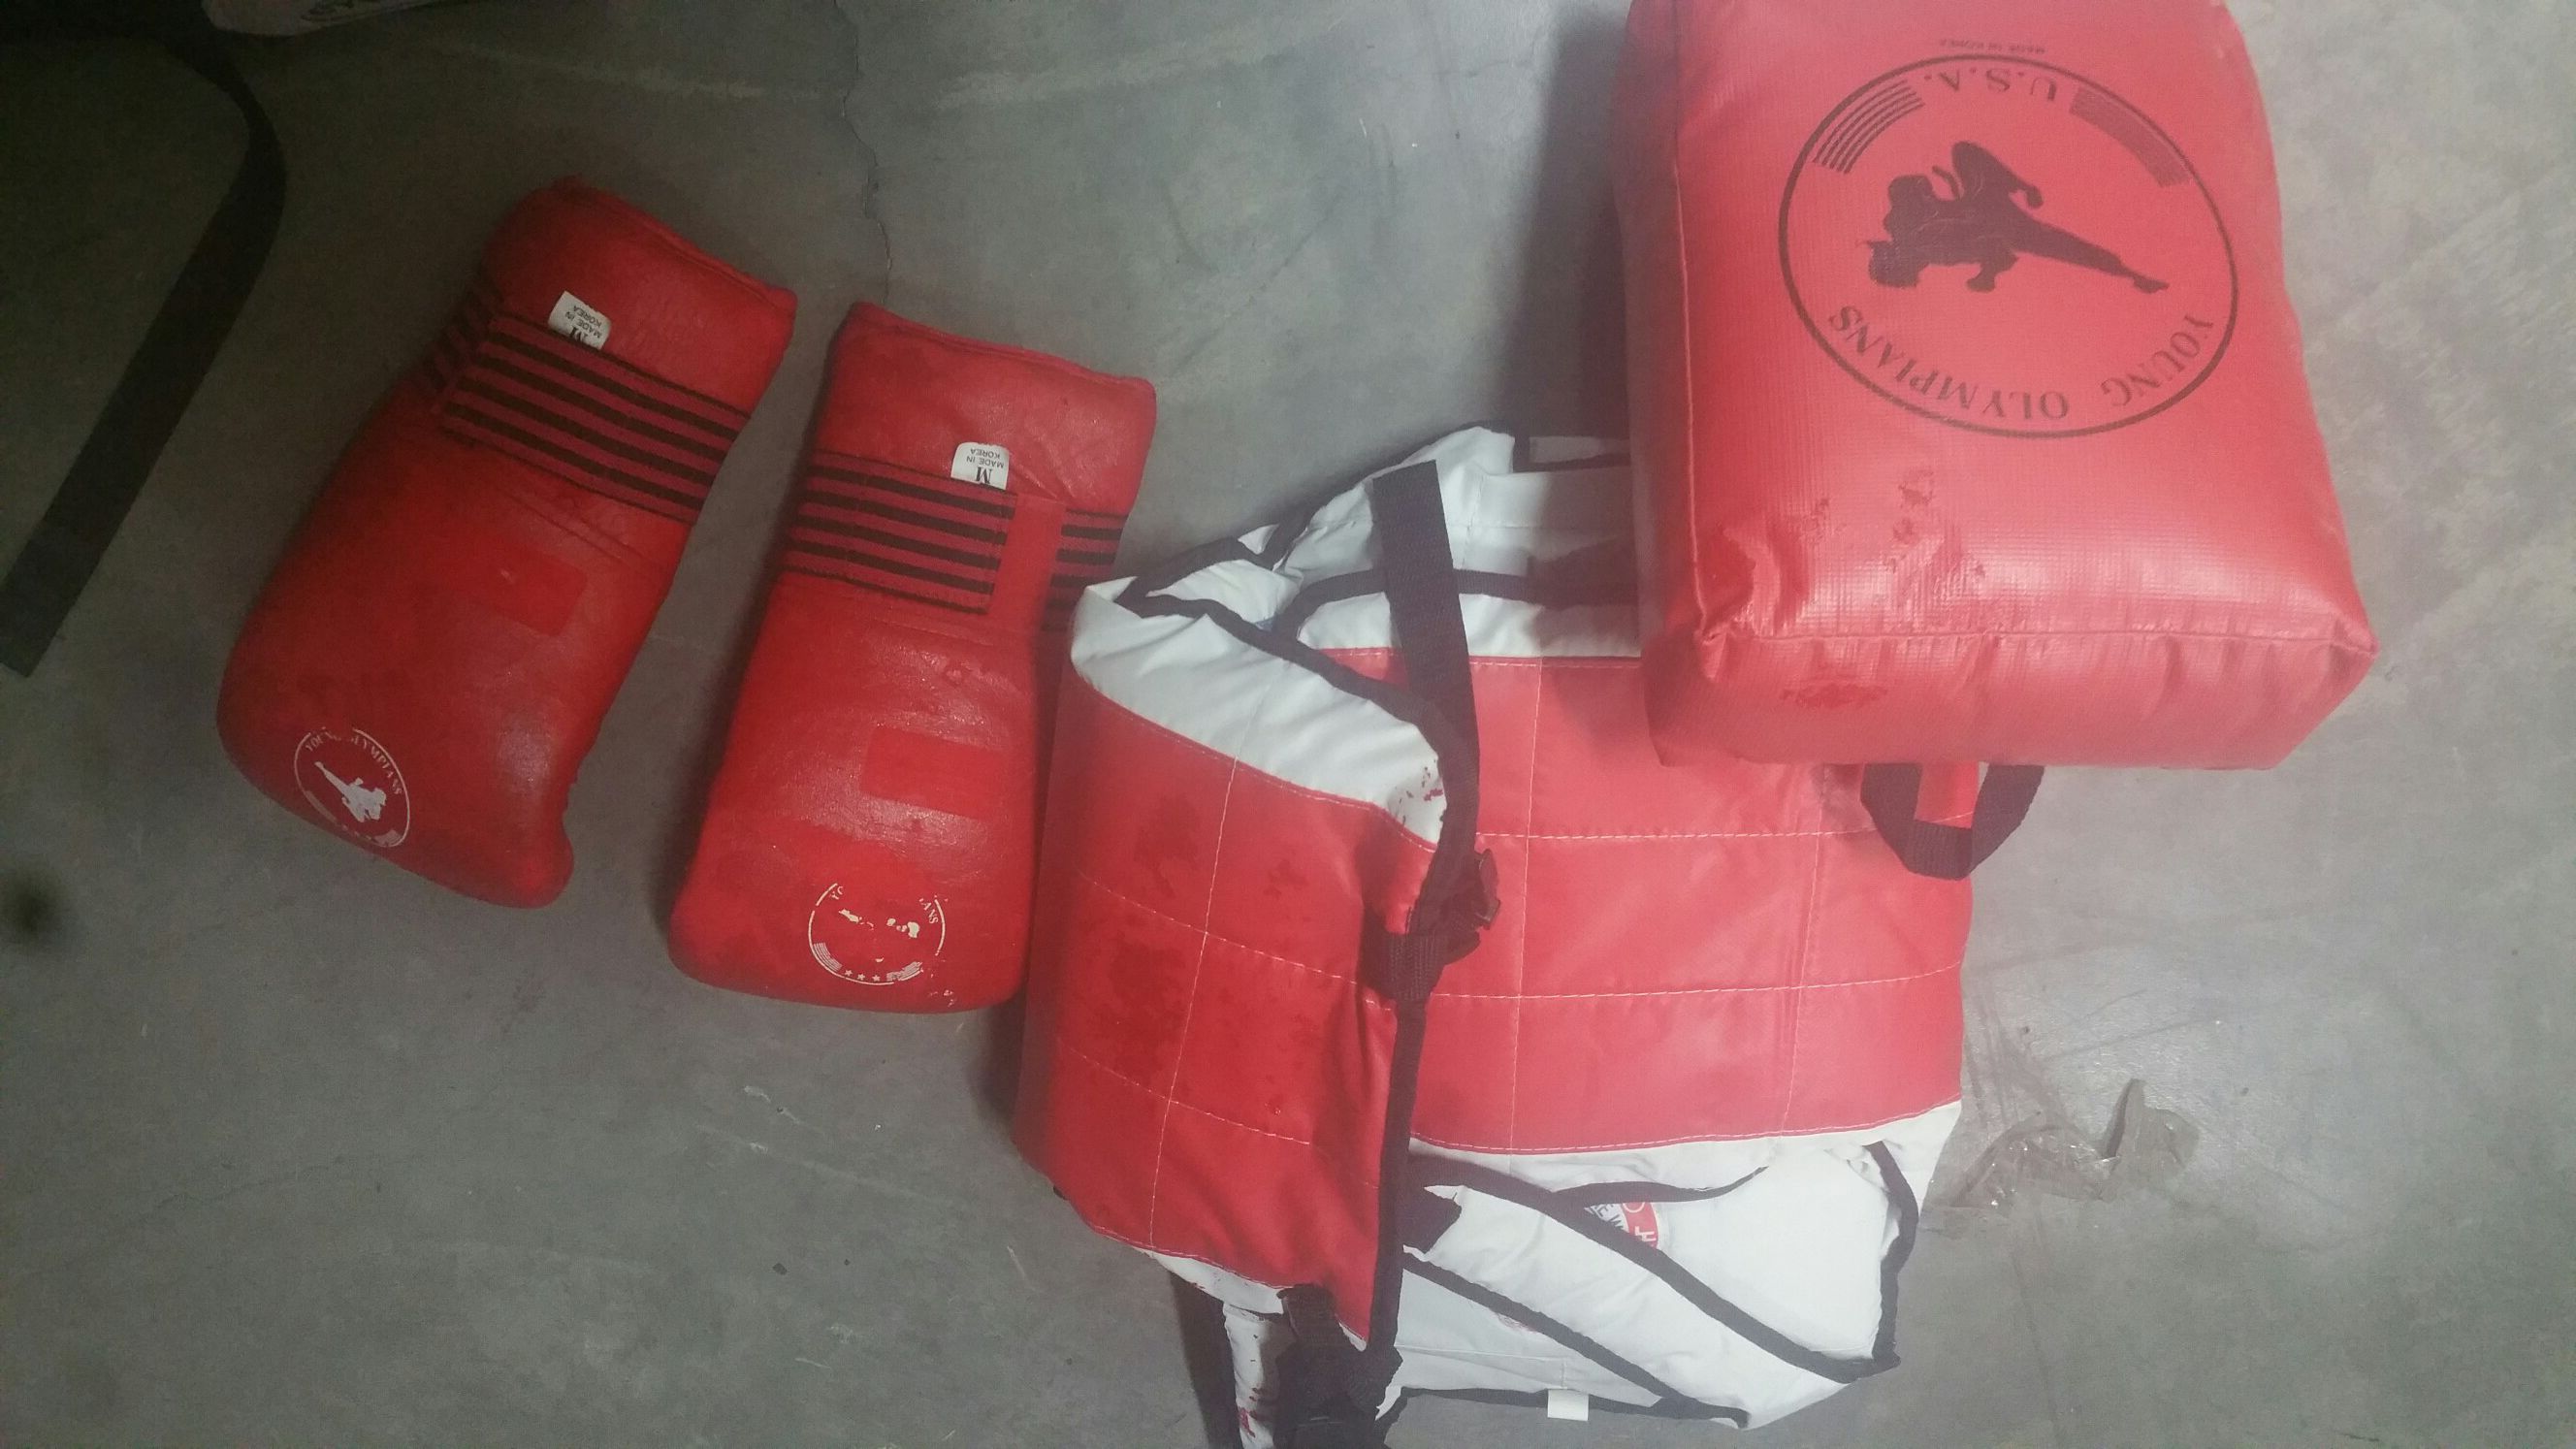 Boxing training equipment